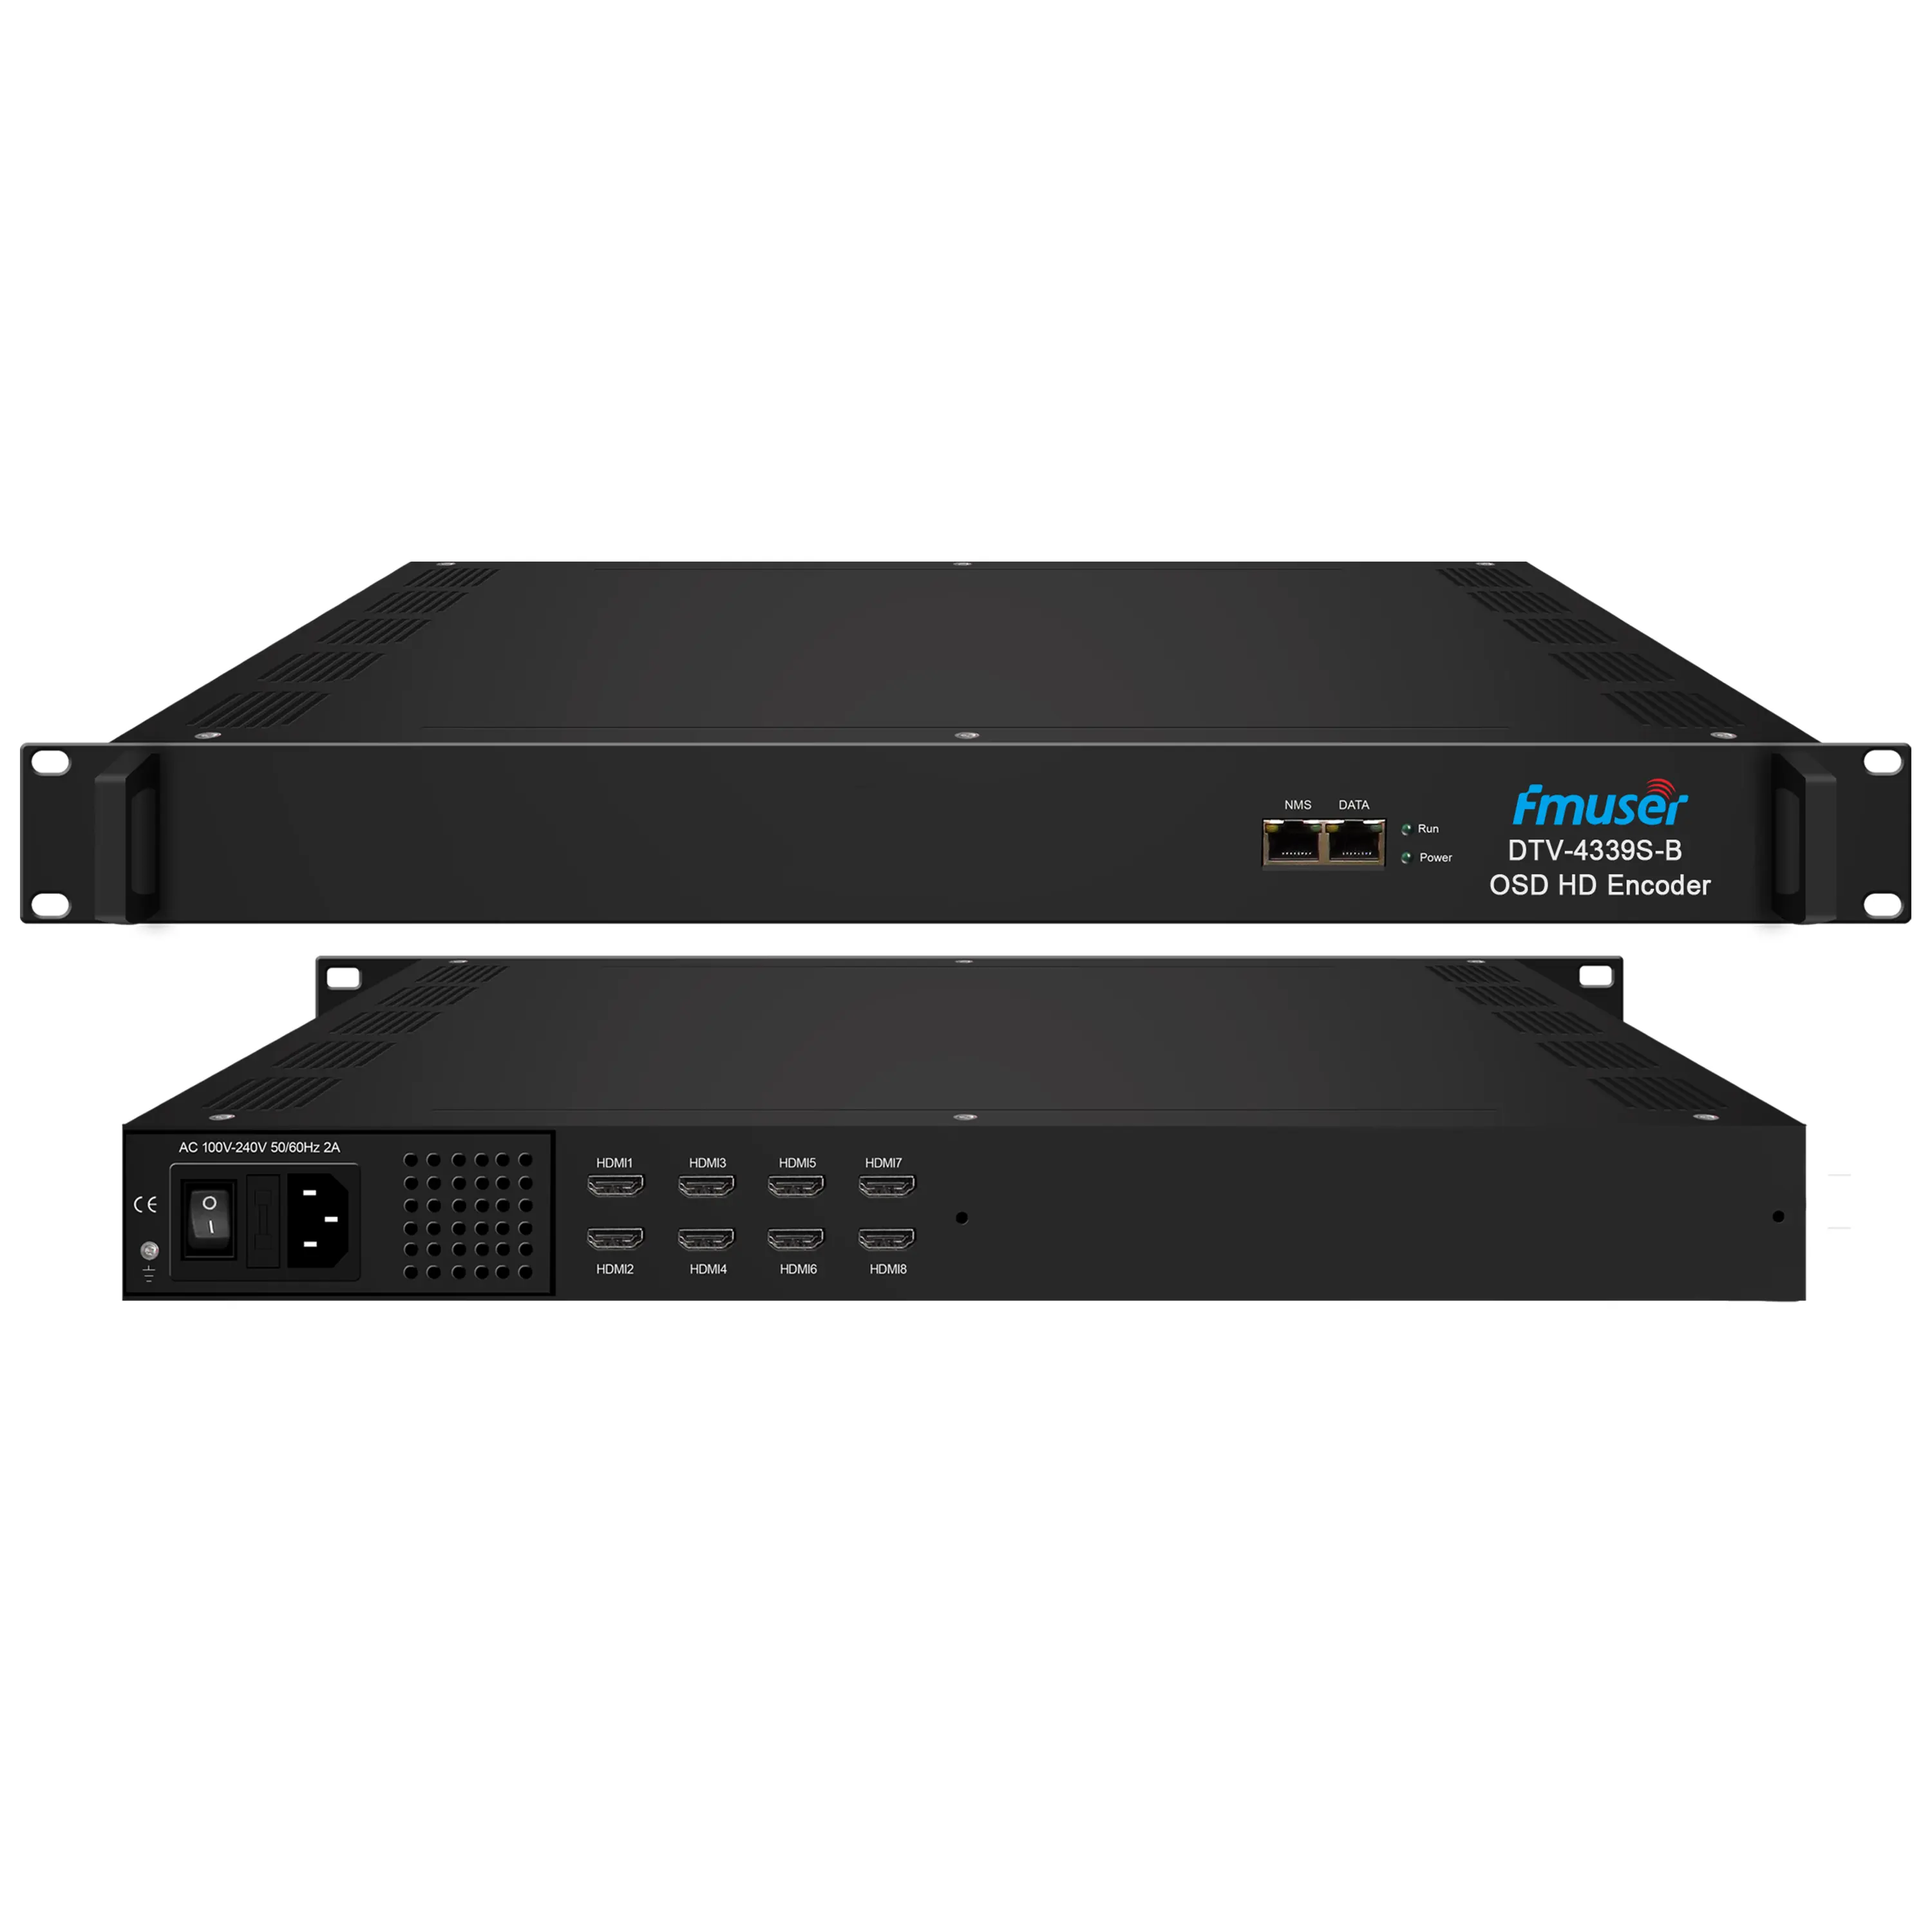 FMUSER DTV-4339S-B 8 HD Mpeg4/H.264 IP 8SPTS 스트리밍 디지털 TV 헤드 엔드 시스템 8 채널 IPTV OSD 인코더